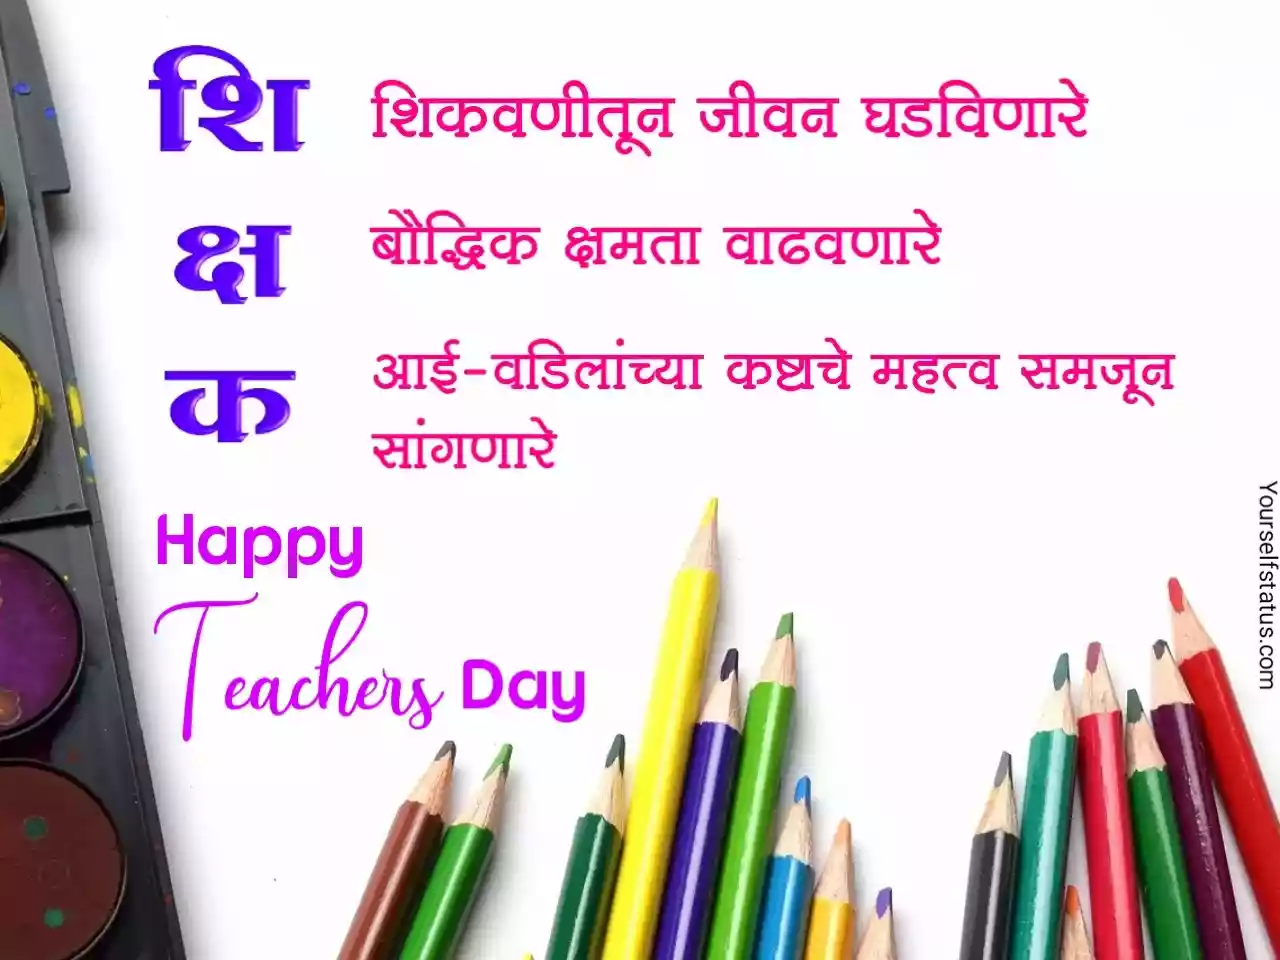 Teachers day greetings in marathi